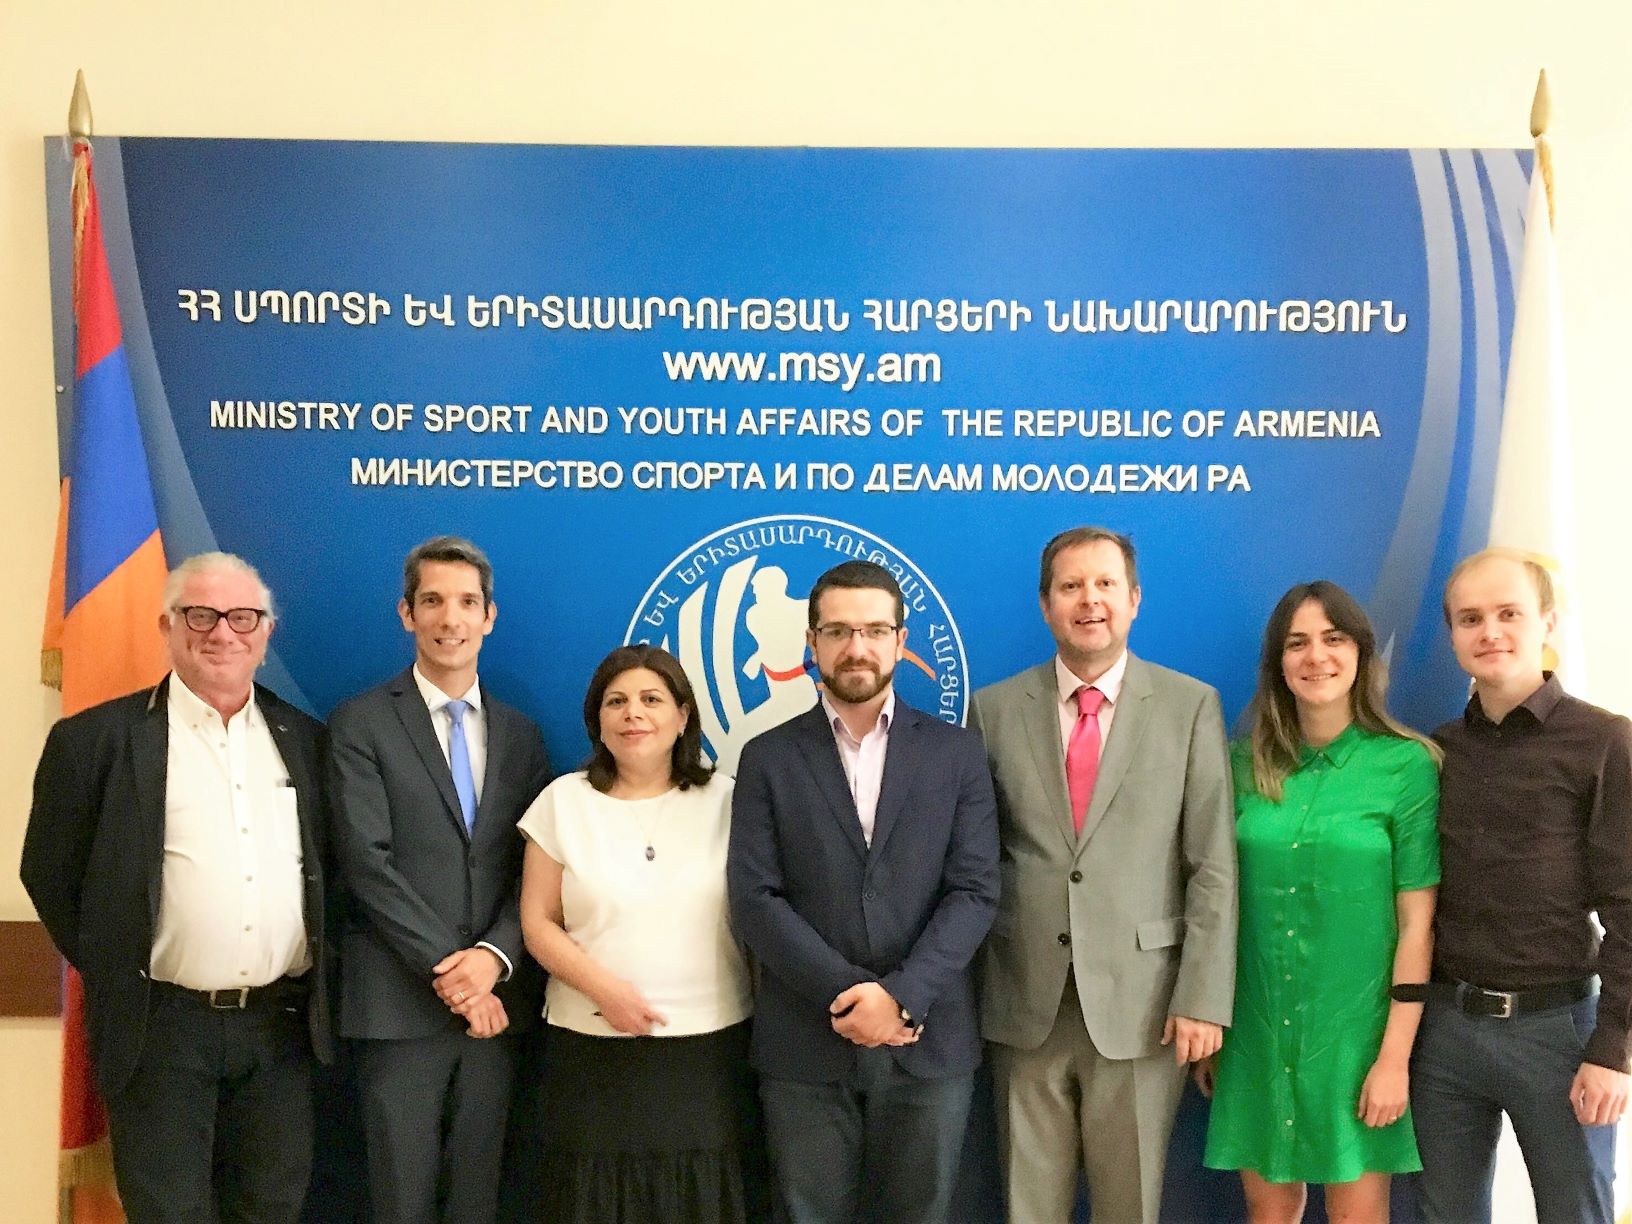 Youth policy advisory mission to Armenia